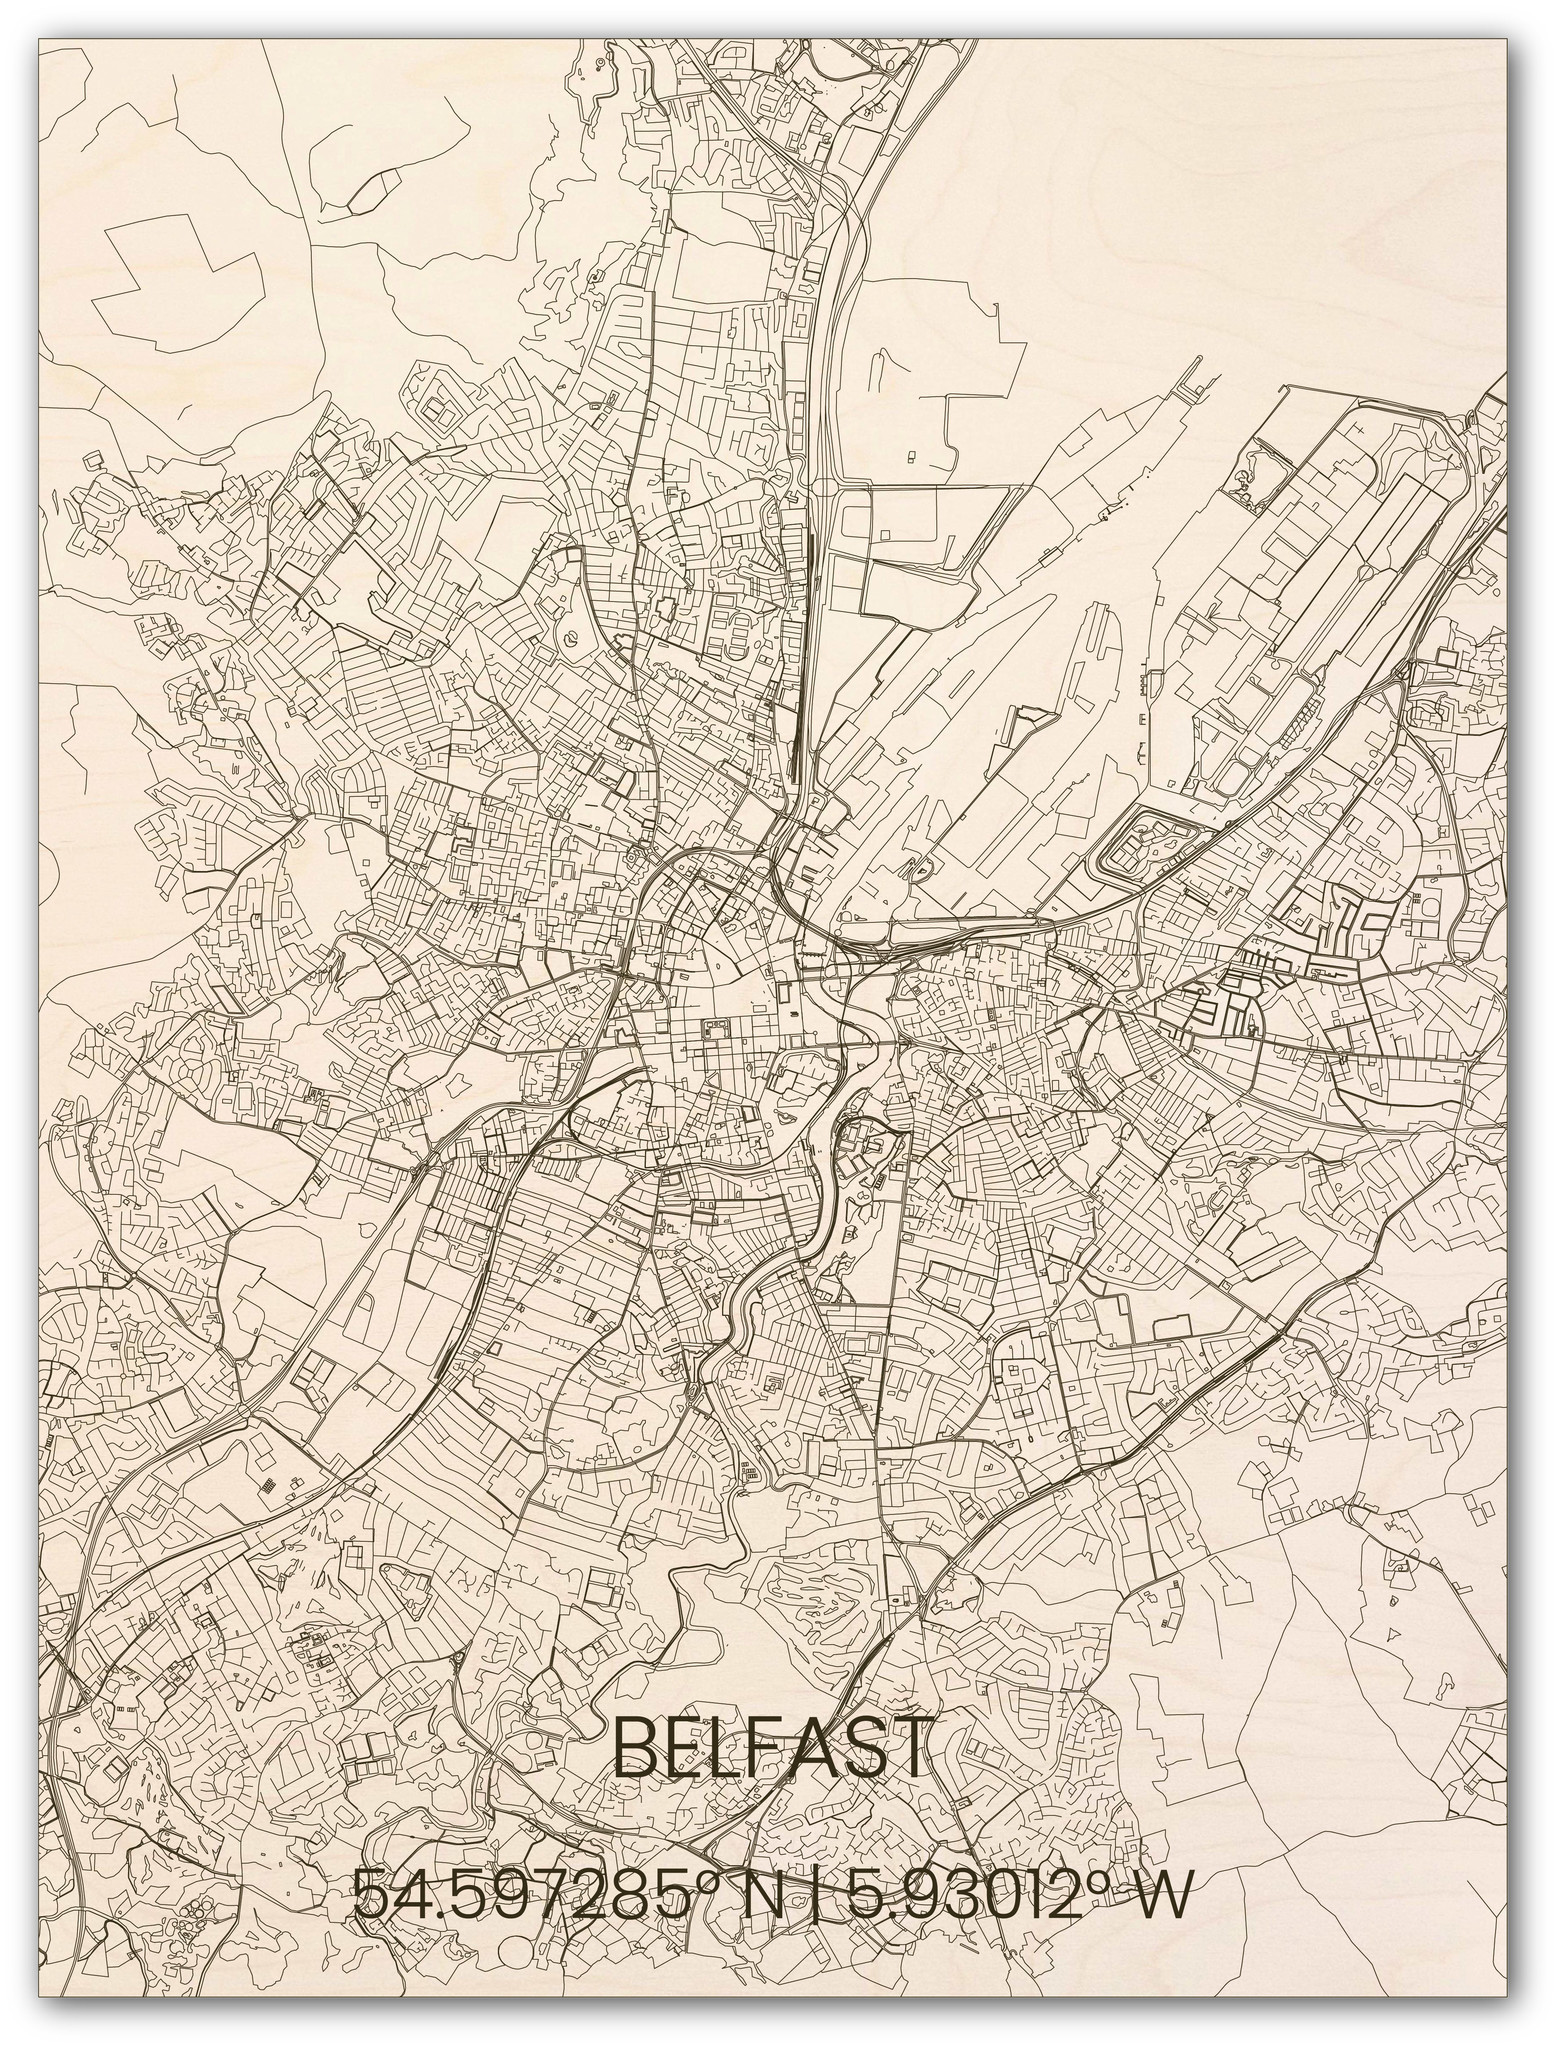 Houten stadsplattegrond Belfast-1